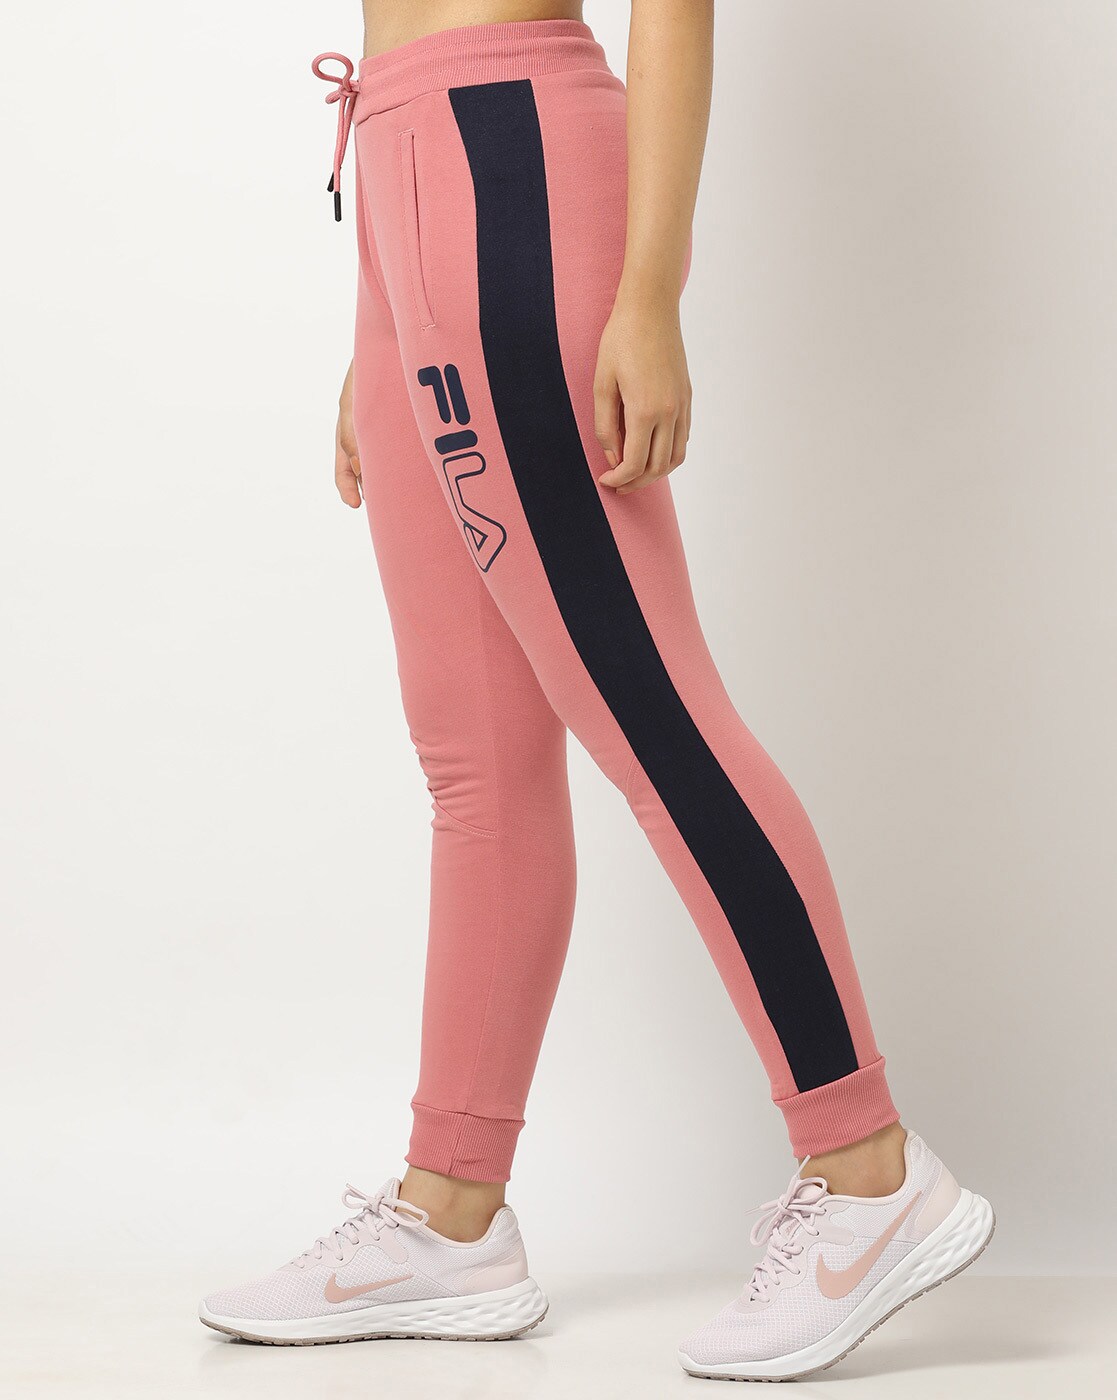 Fila HADA AOP Track Pants for women - Buy Online! - HERE